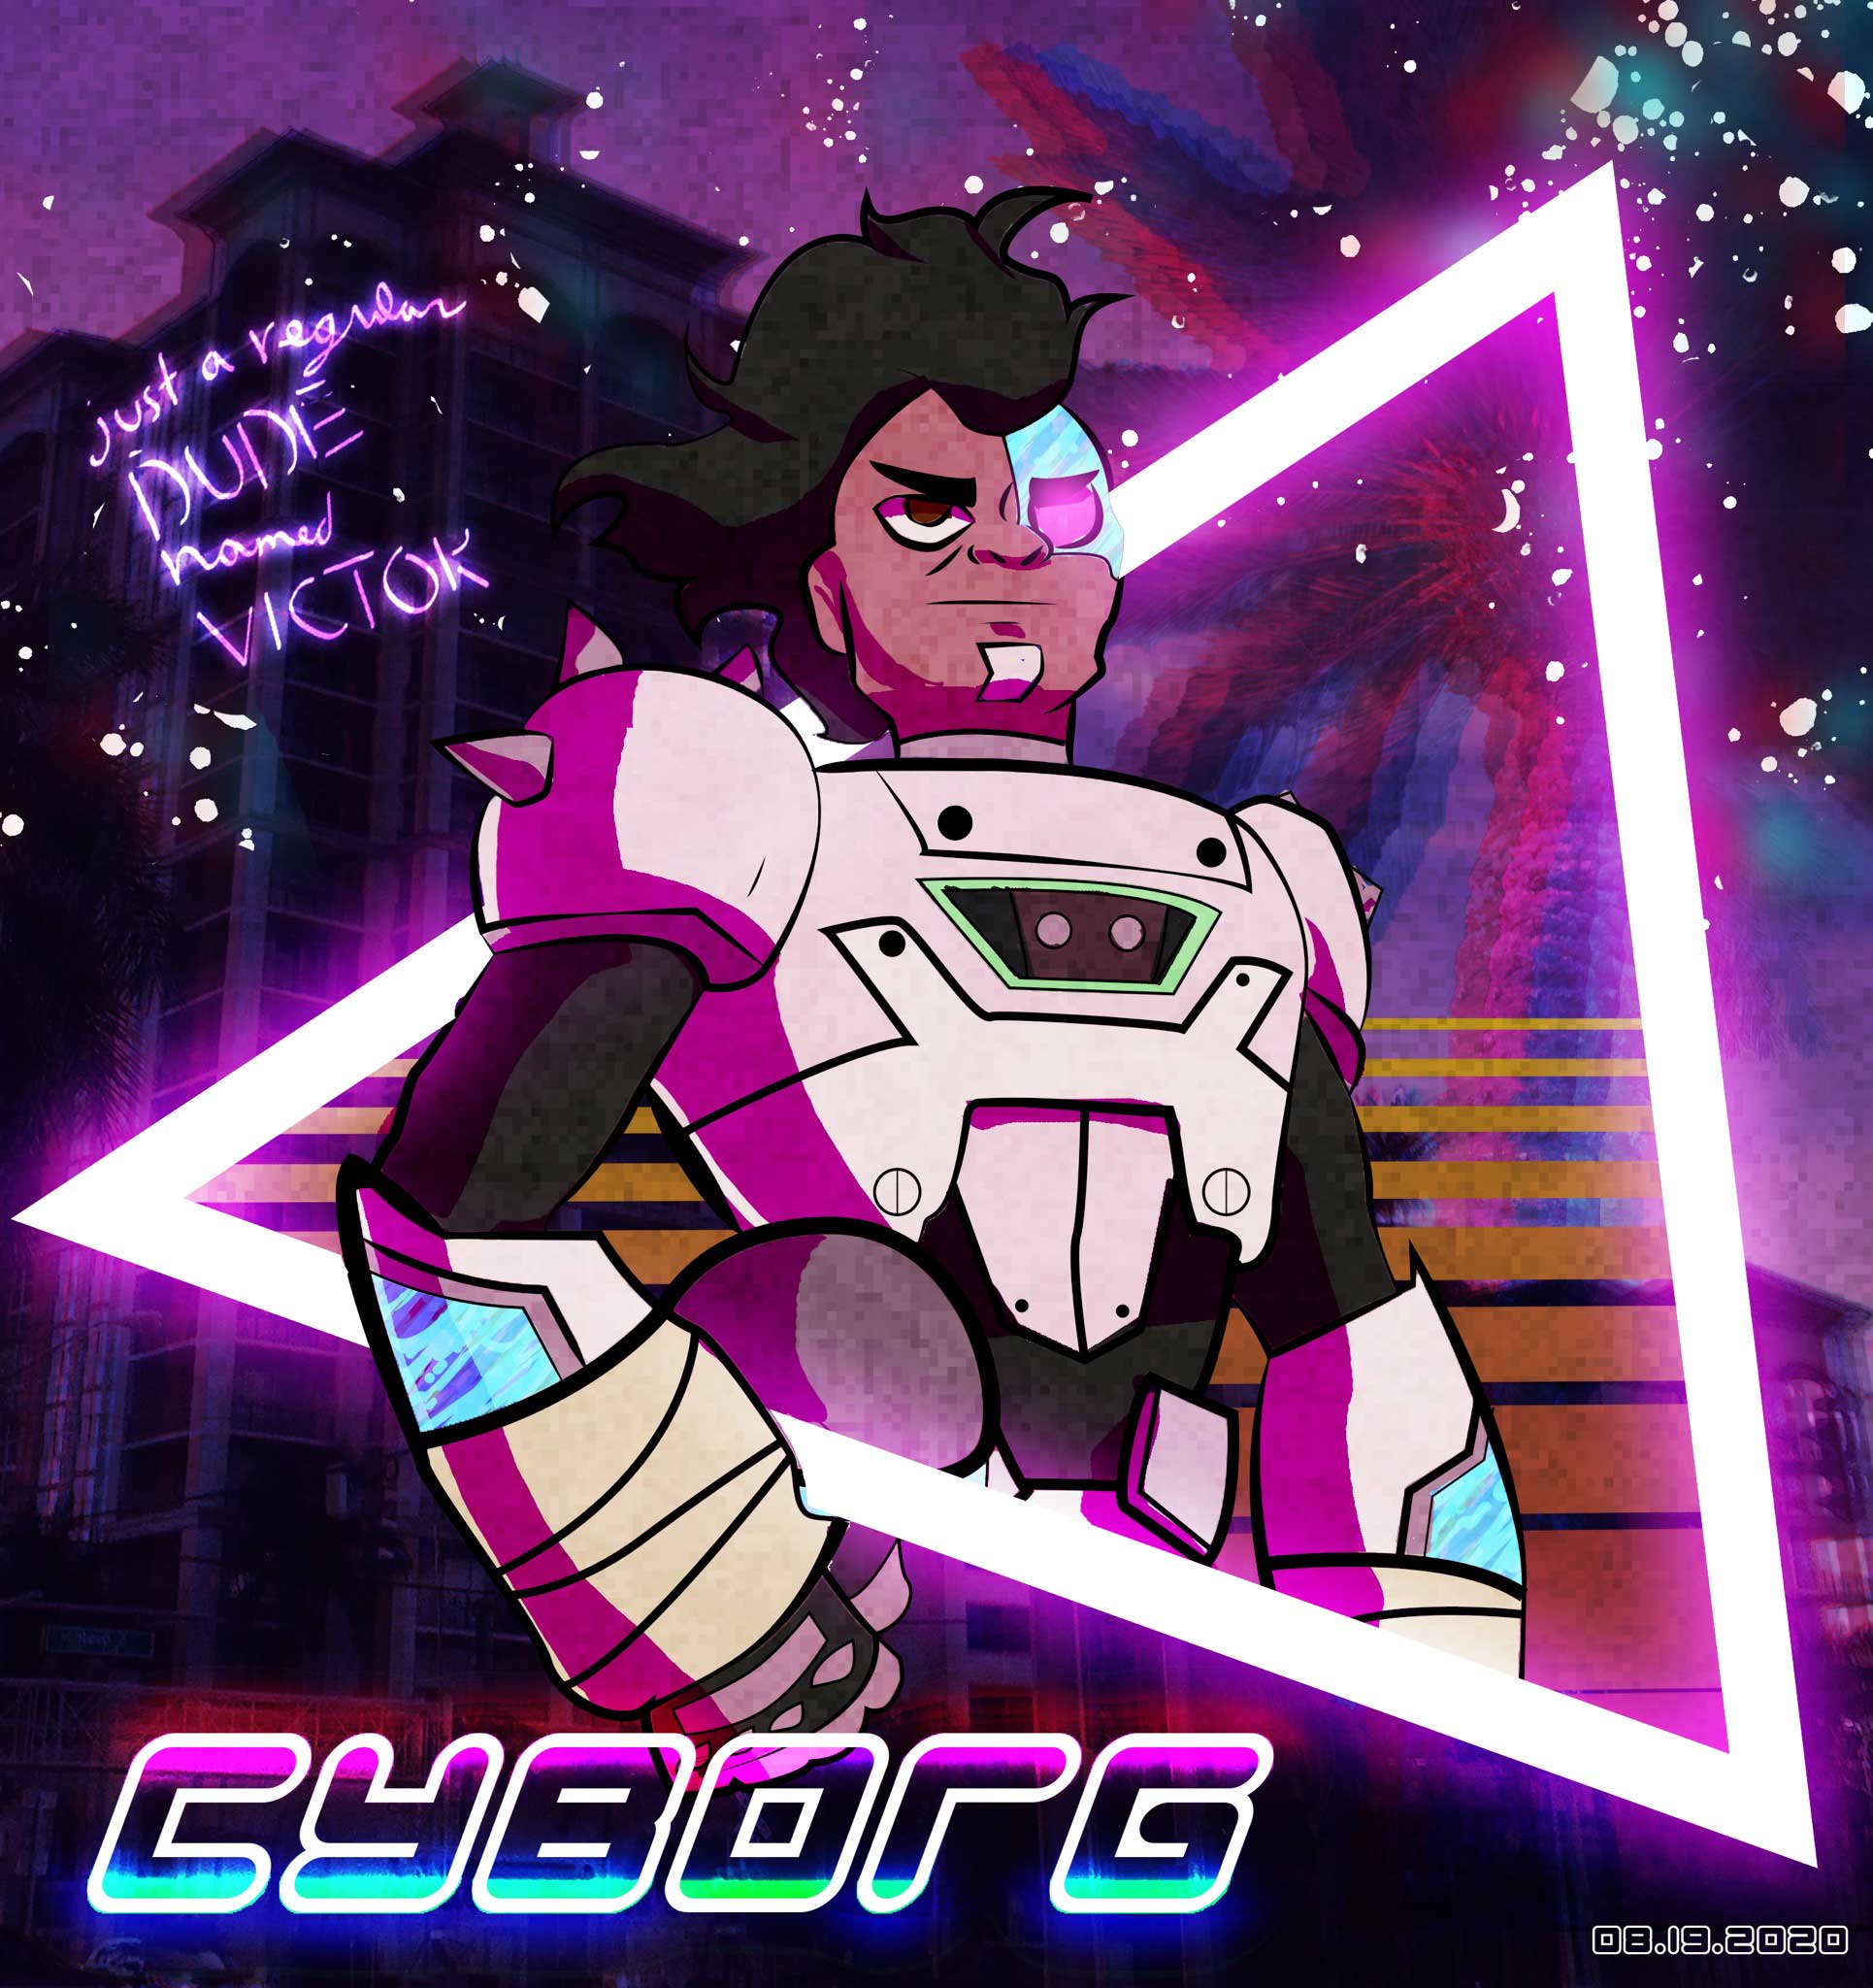 Cyborg - The Night Begins to Shine